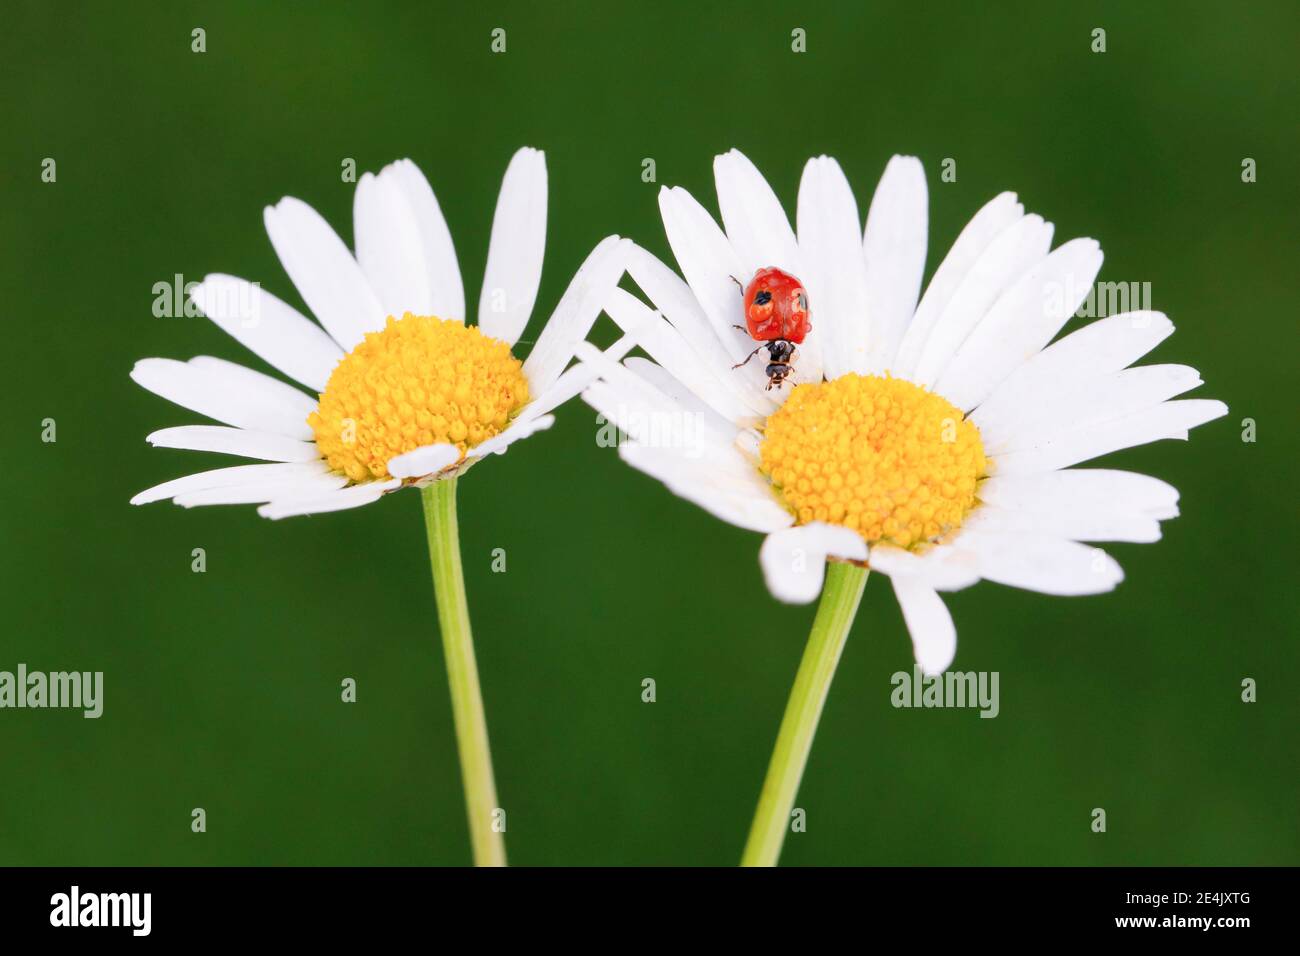 Two-spotted ladybird on daisy, Switzerland Stock Photo